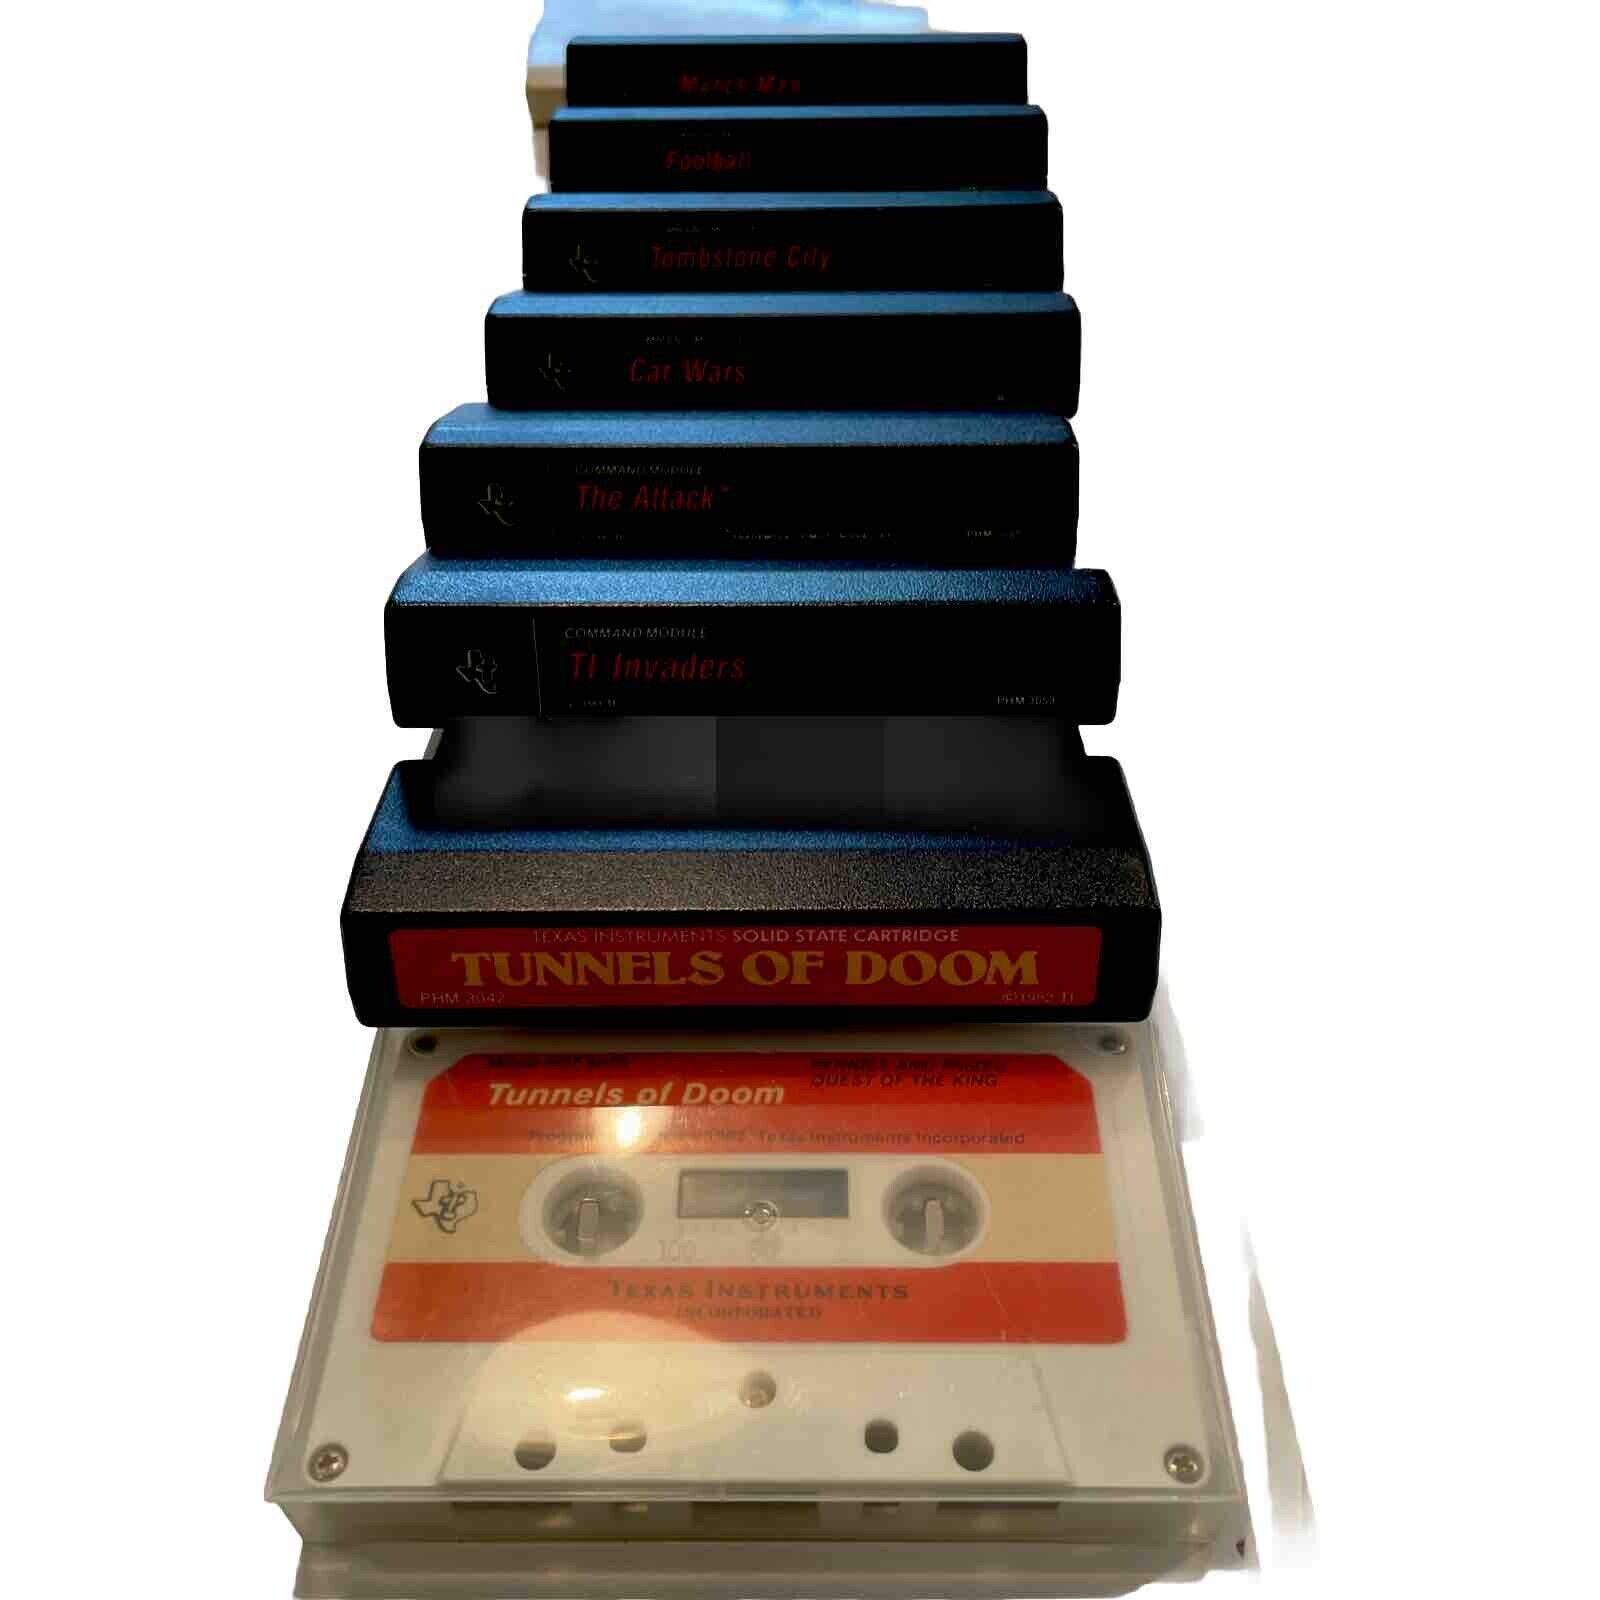 Texas Instruments Home Computer Comand Module Cartridge Lot of 7 + Doom Cassette